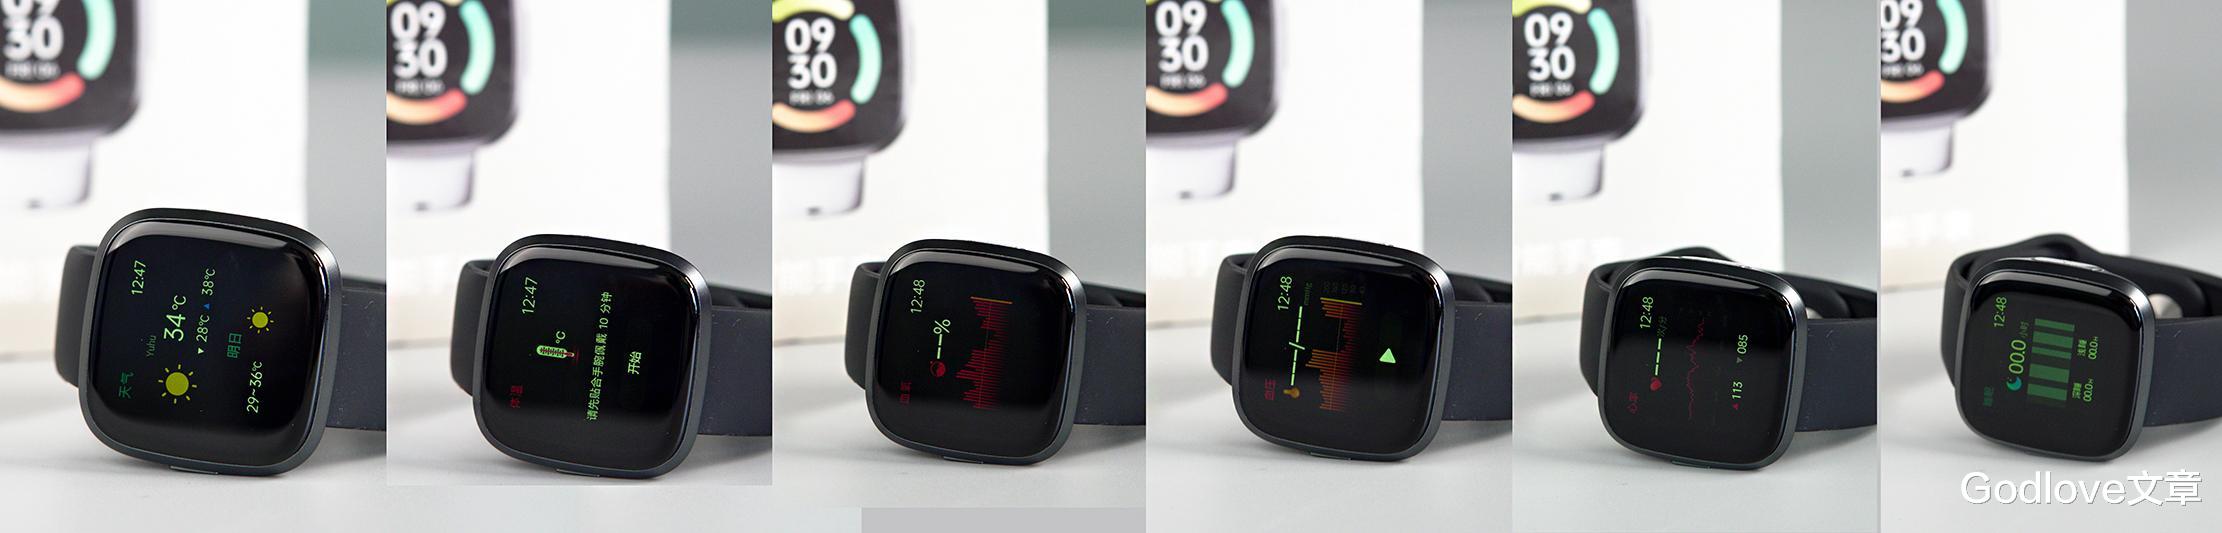 dido|年轻人的第一款健康智能手表——Dido G28S心电血压智能手表体验